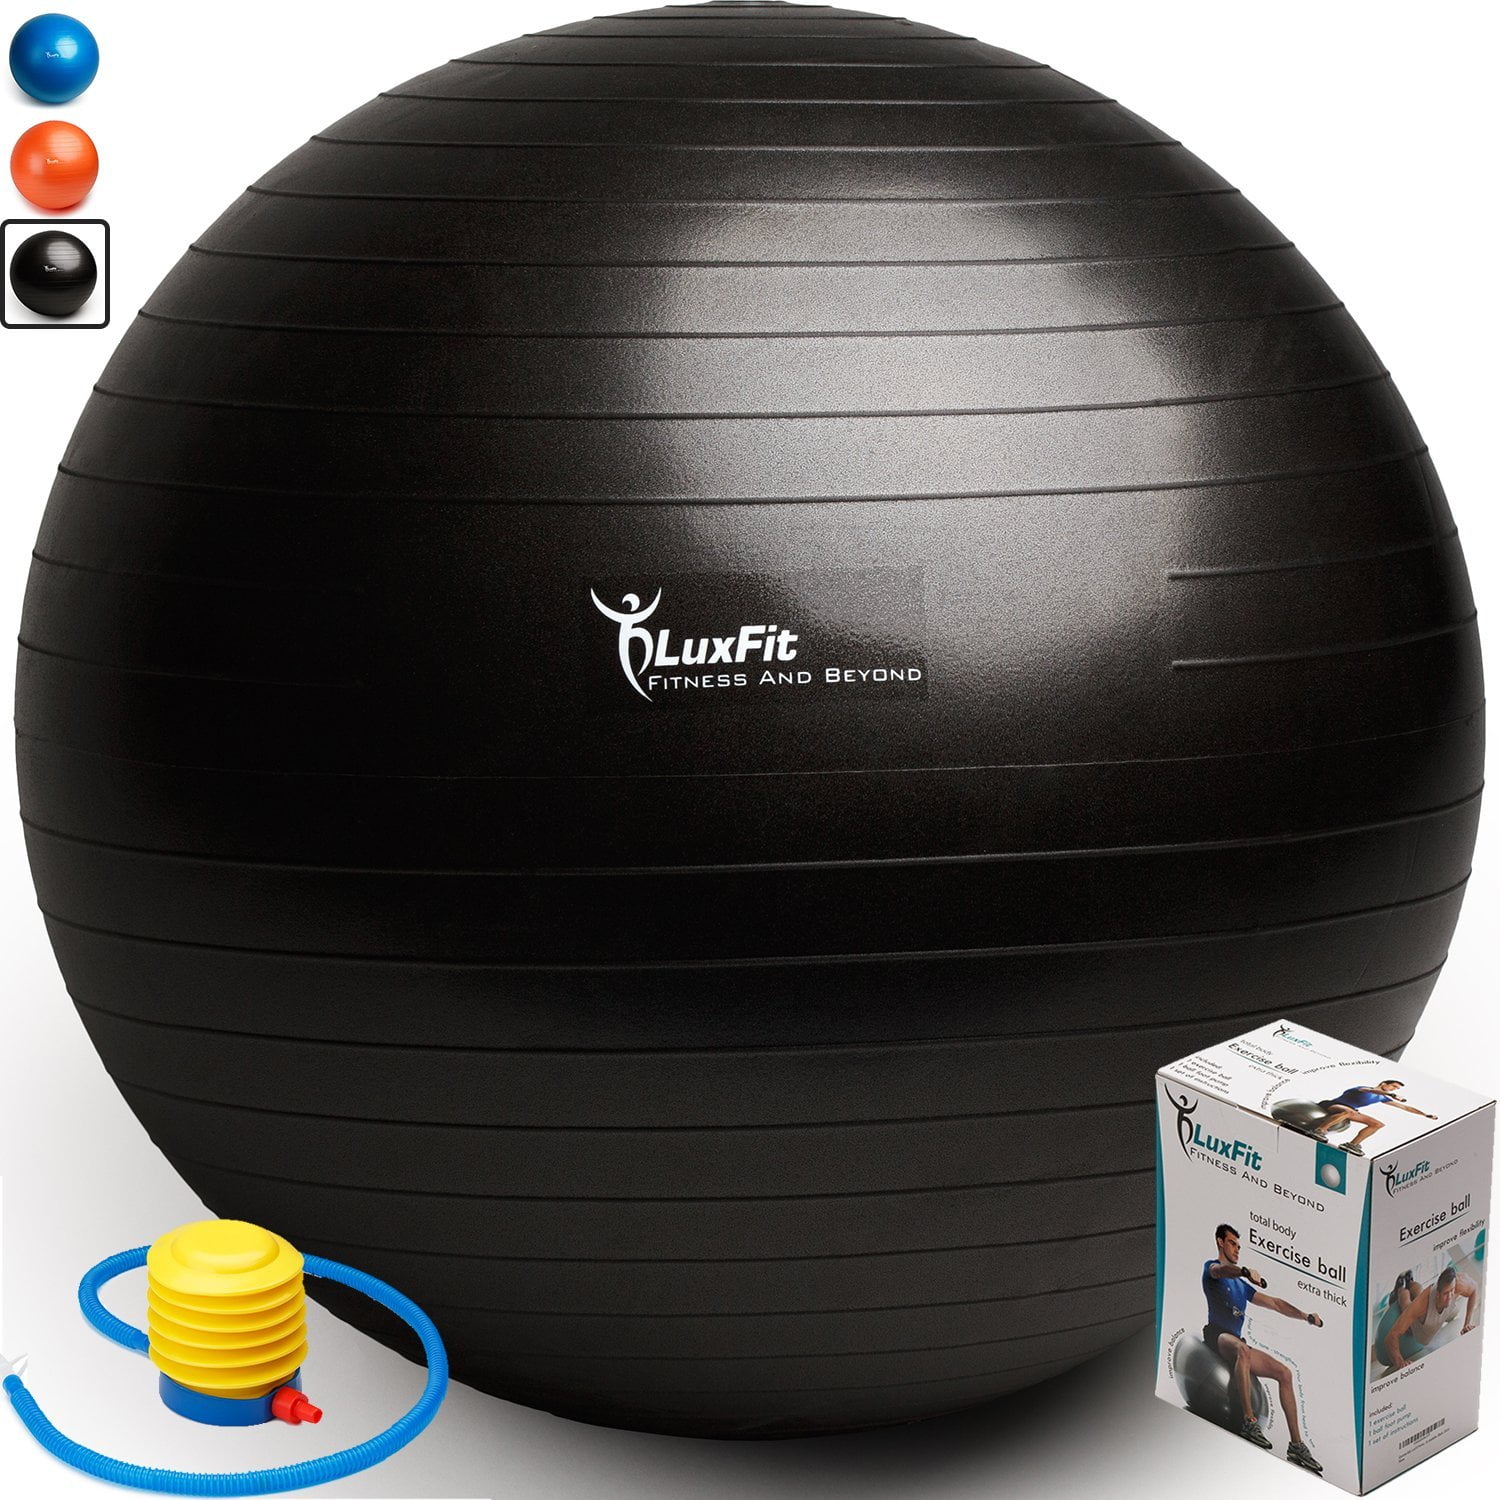 Yoga Ball Pilate Fitness Gym 65cm Balance Pregnancy Exercise Swiss Balls Pump